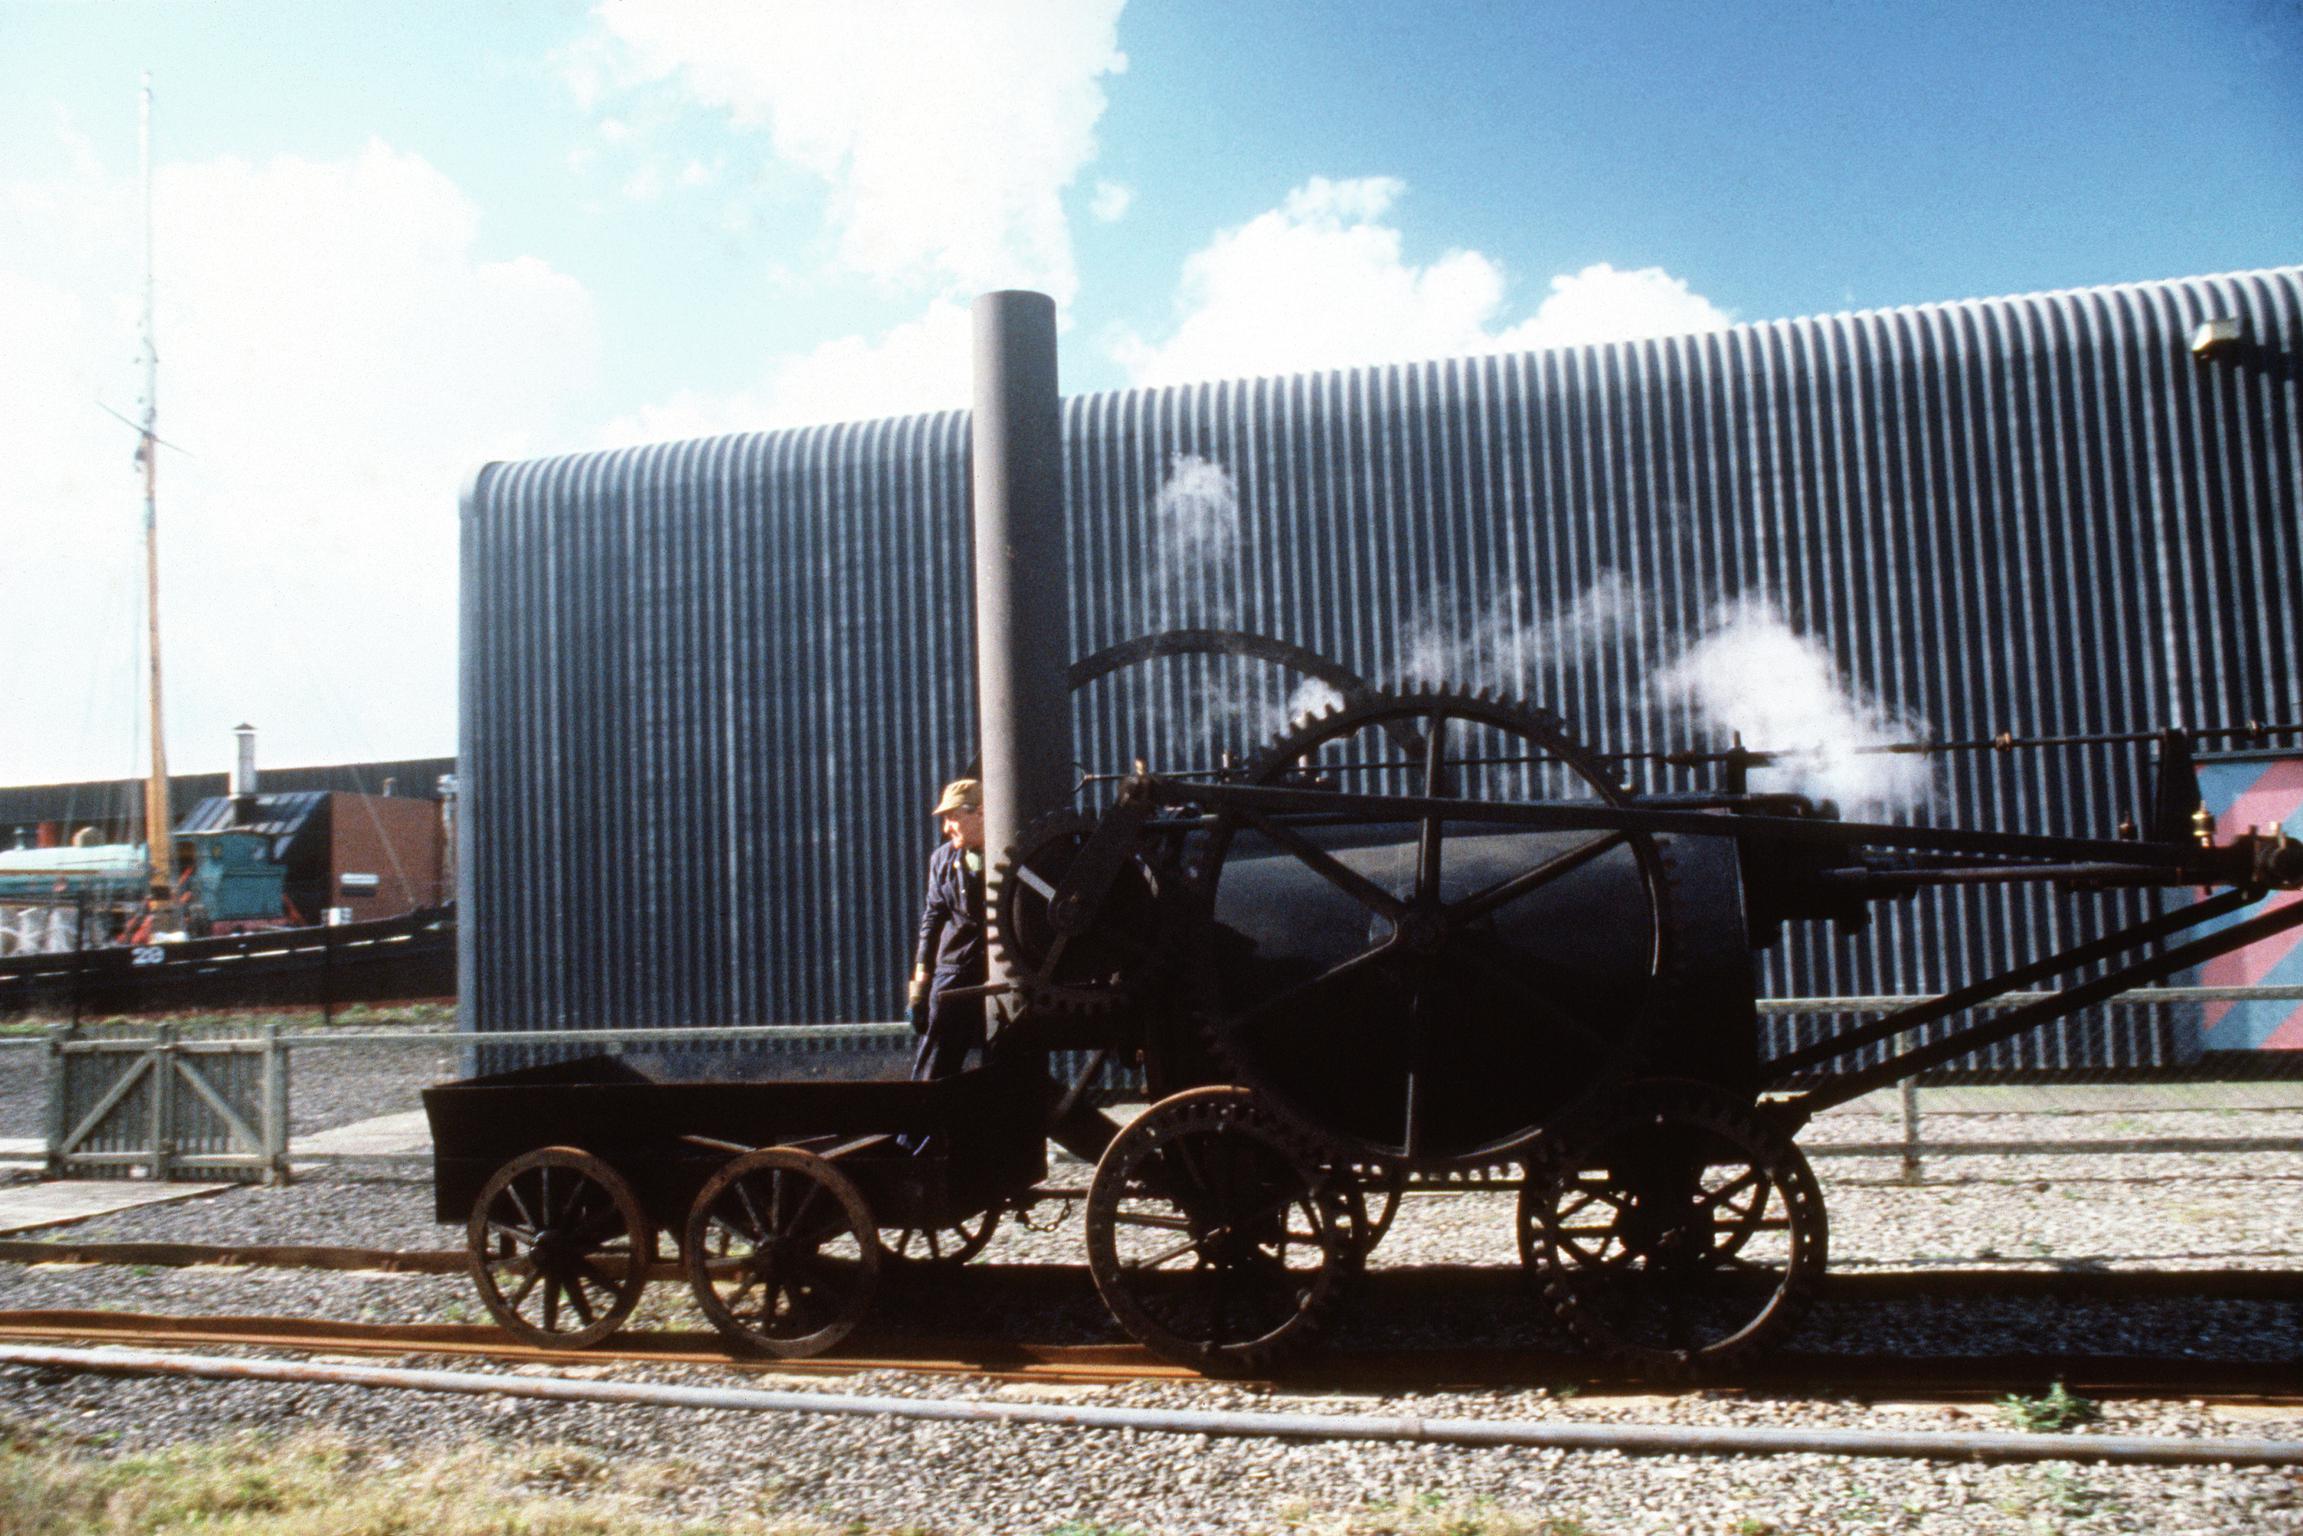 Trevithick's Penydarren locomotive